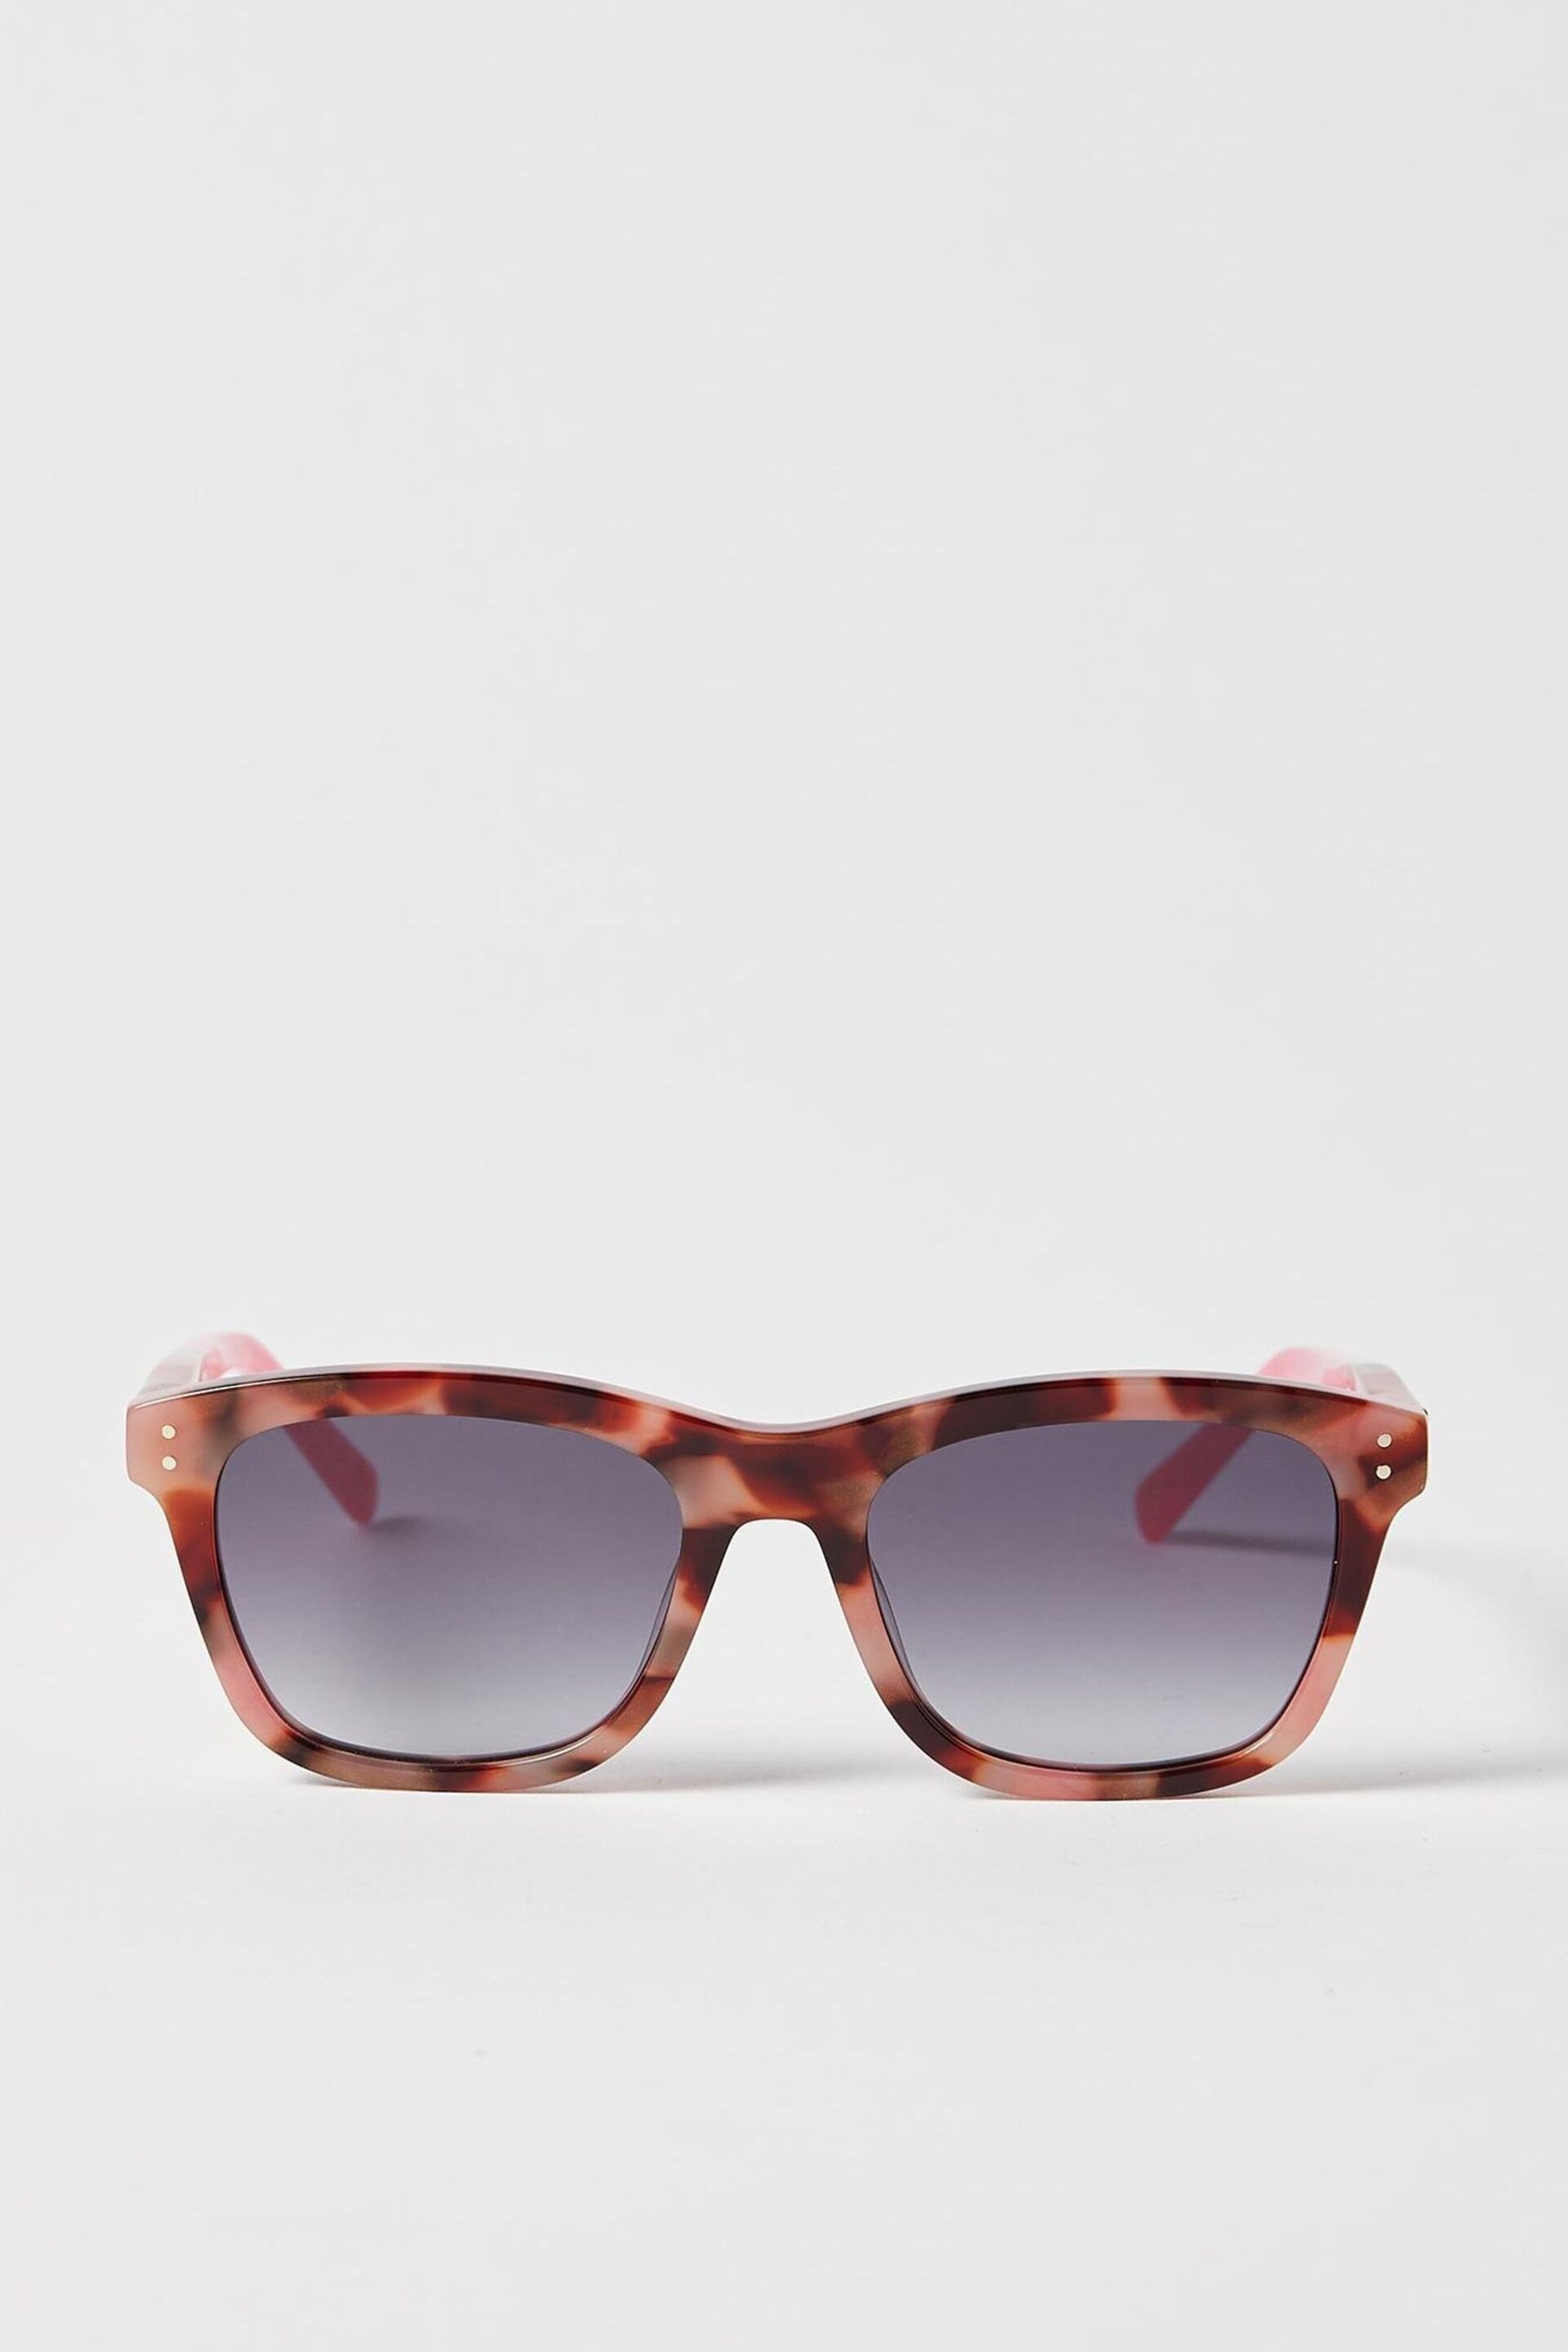 Oliver Bonas Pink Faux Fur Tortoiseshell Rectangle Acetate Sunglasses - Image 2 of 5